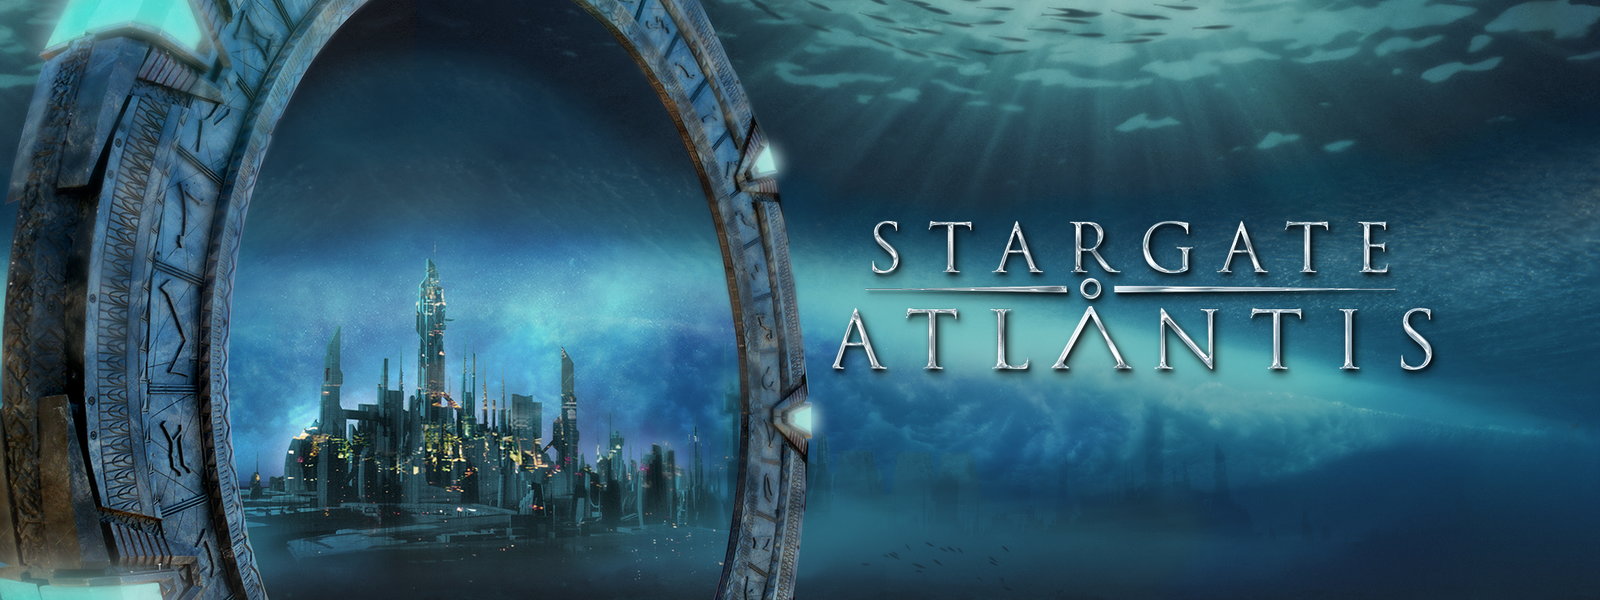 Atlantis mp3. Звёздные врата Атлантида Атлантис. Звёздные врата Атлантида см. Звездные врата Атлантида Постер.